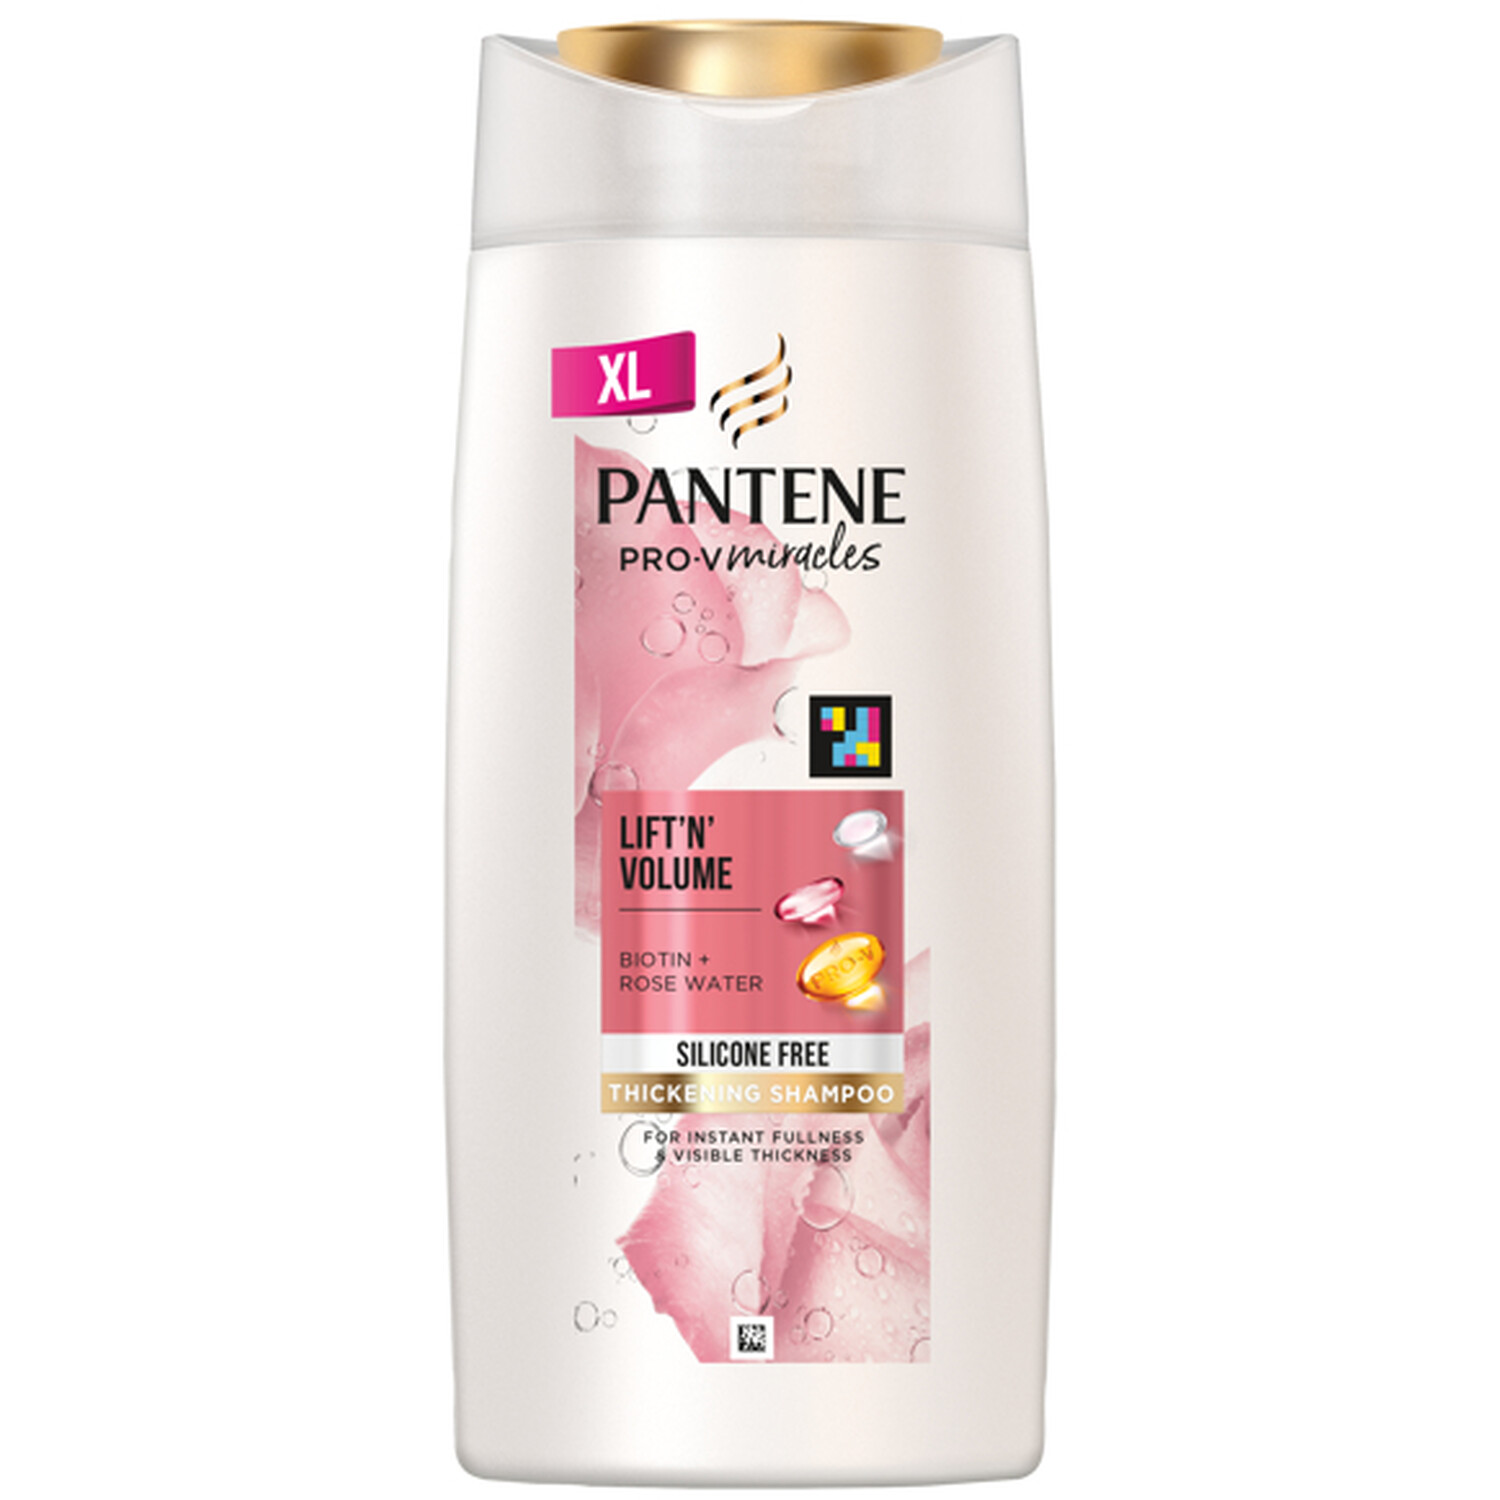 Pantene Pro-V Miracles Lift 'N' Volume Thickening Shampoo 600ml Image